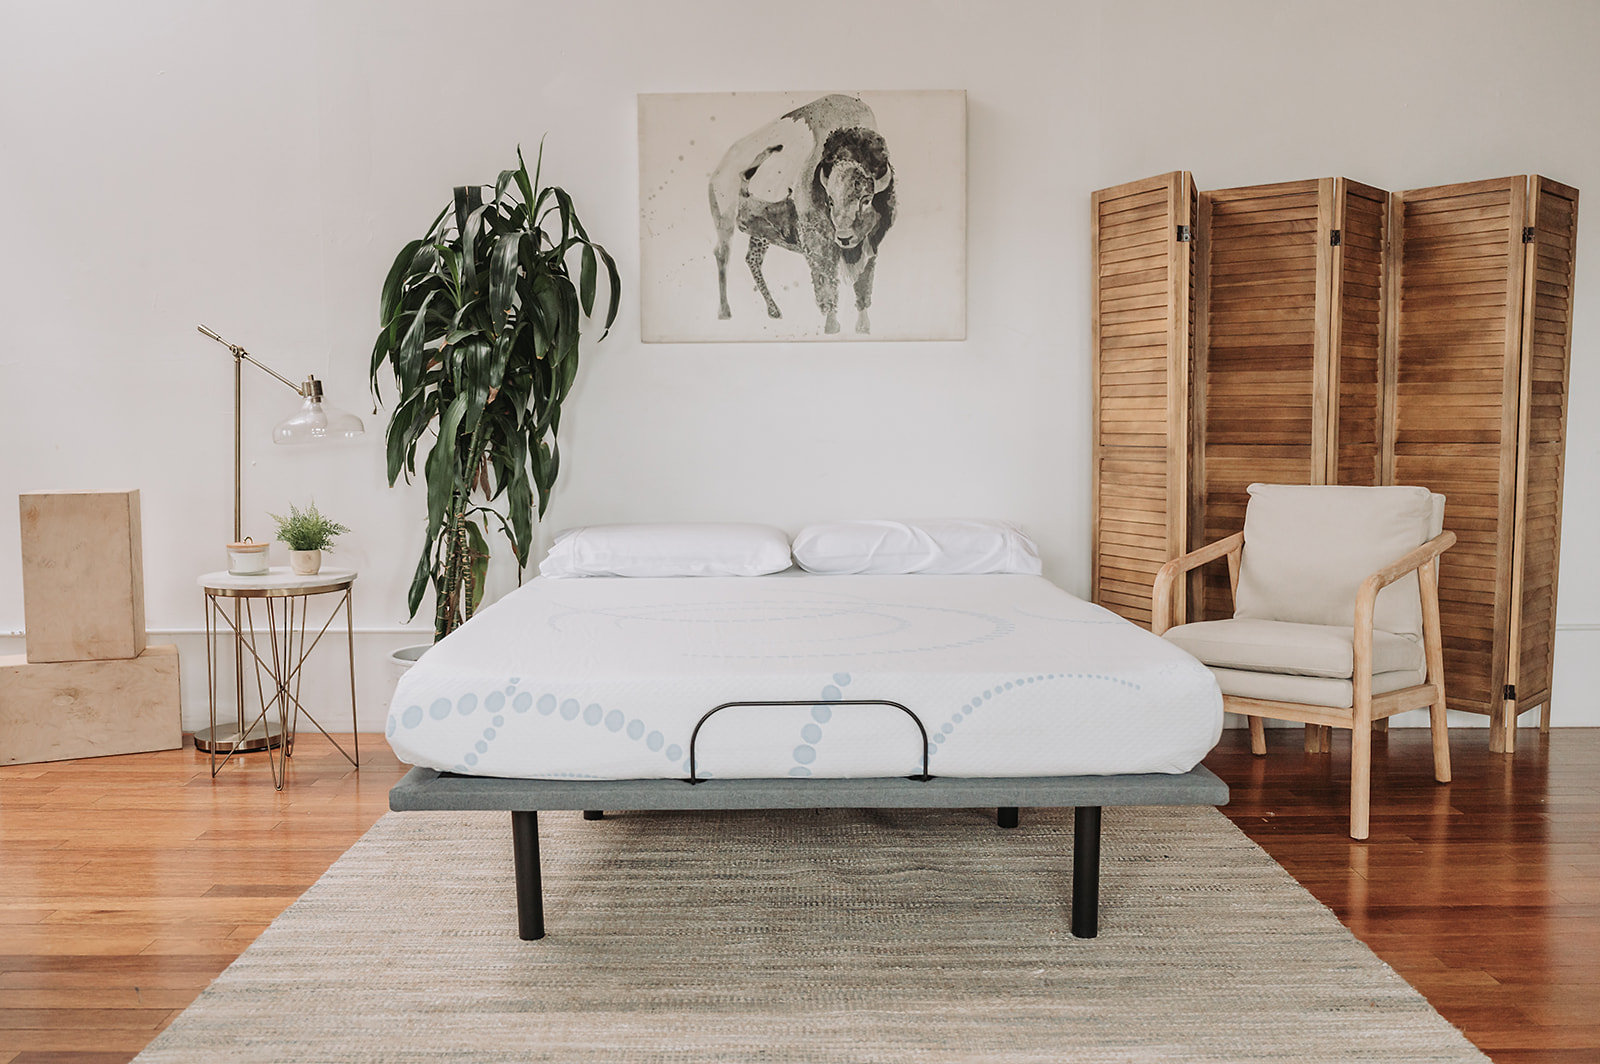 slumber comfort mattress price